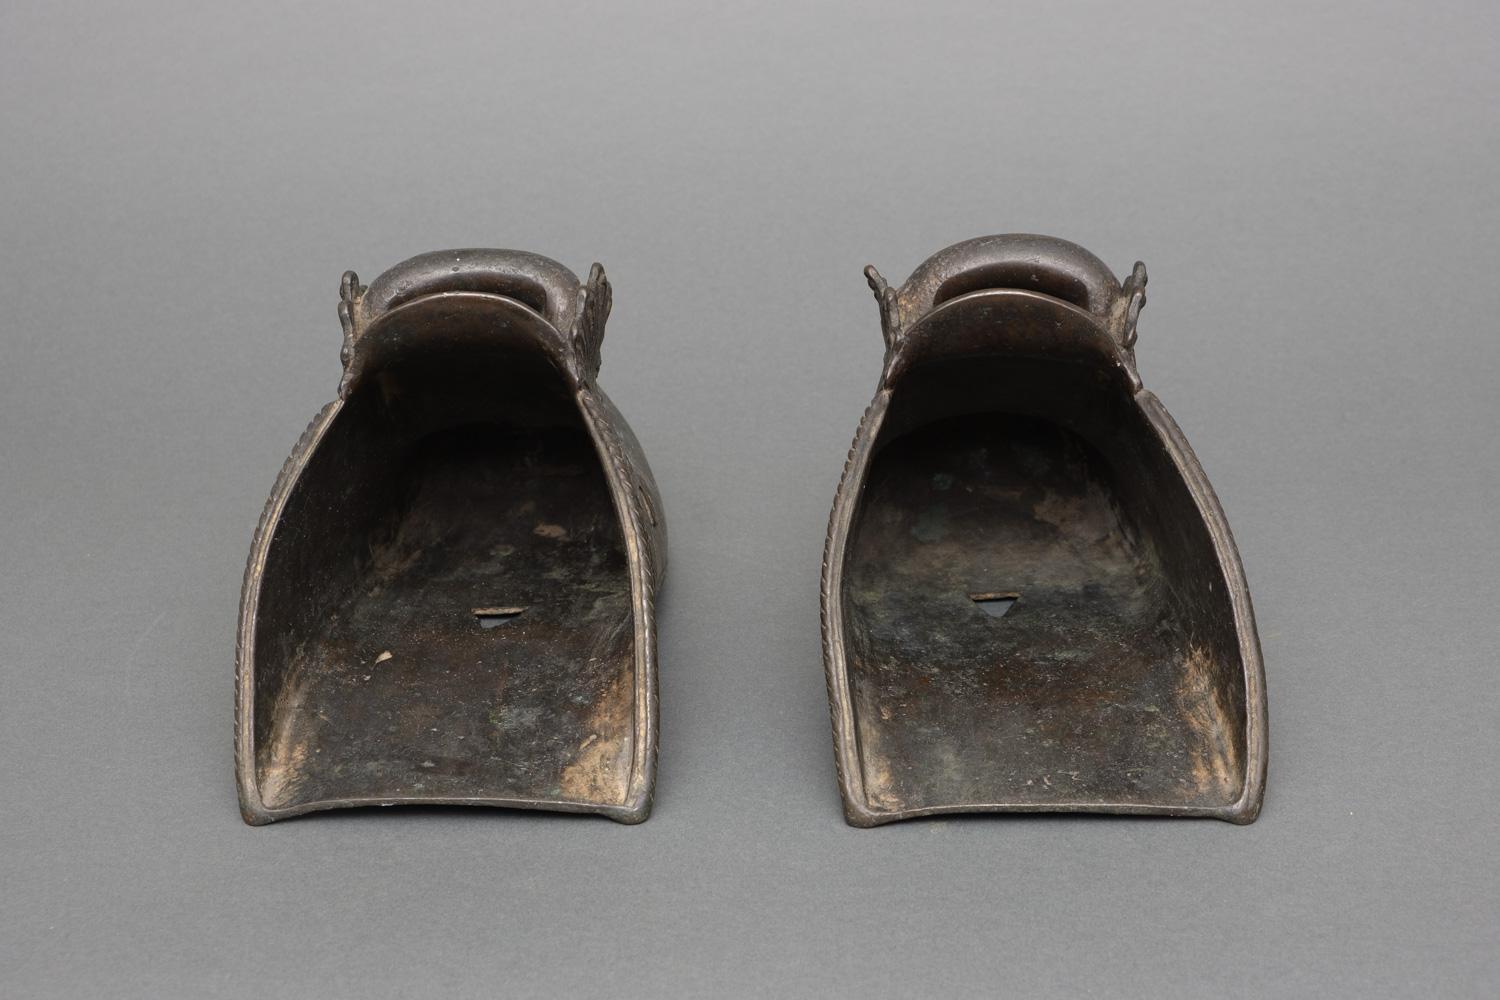 19th Century Pair of Bronze “Shoe-Shape